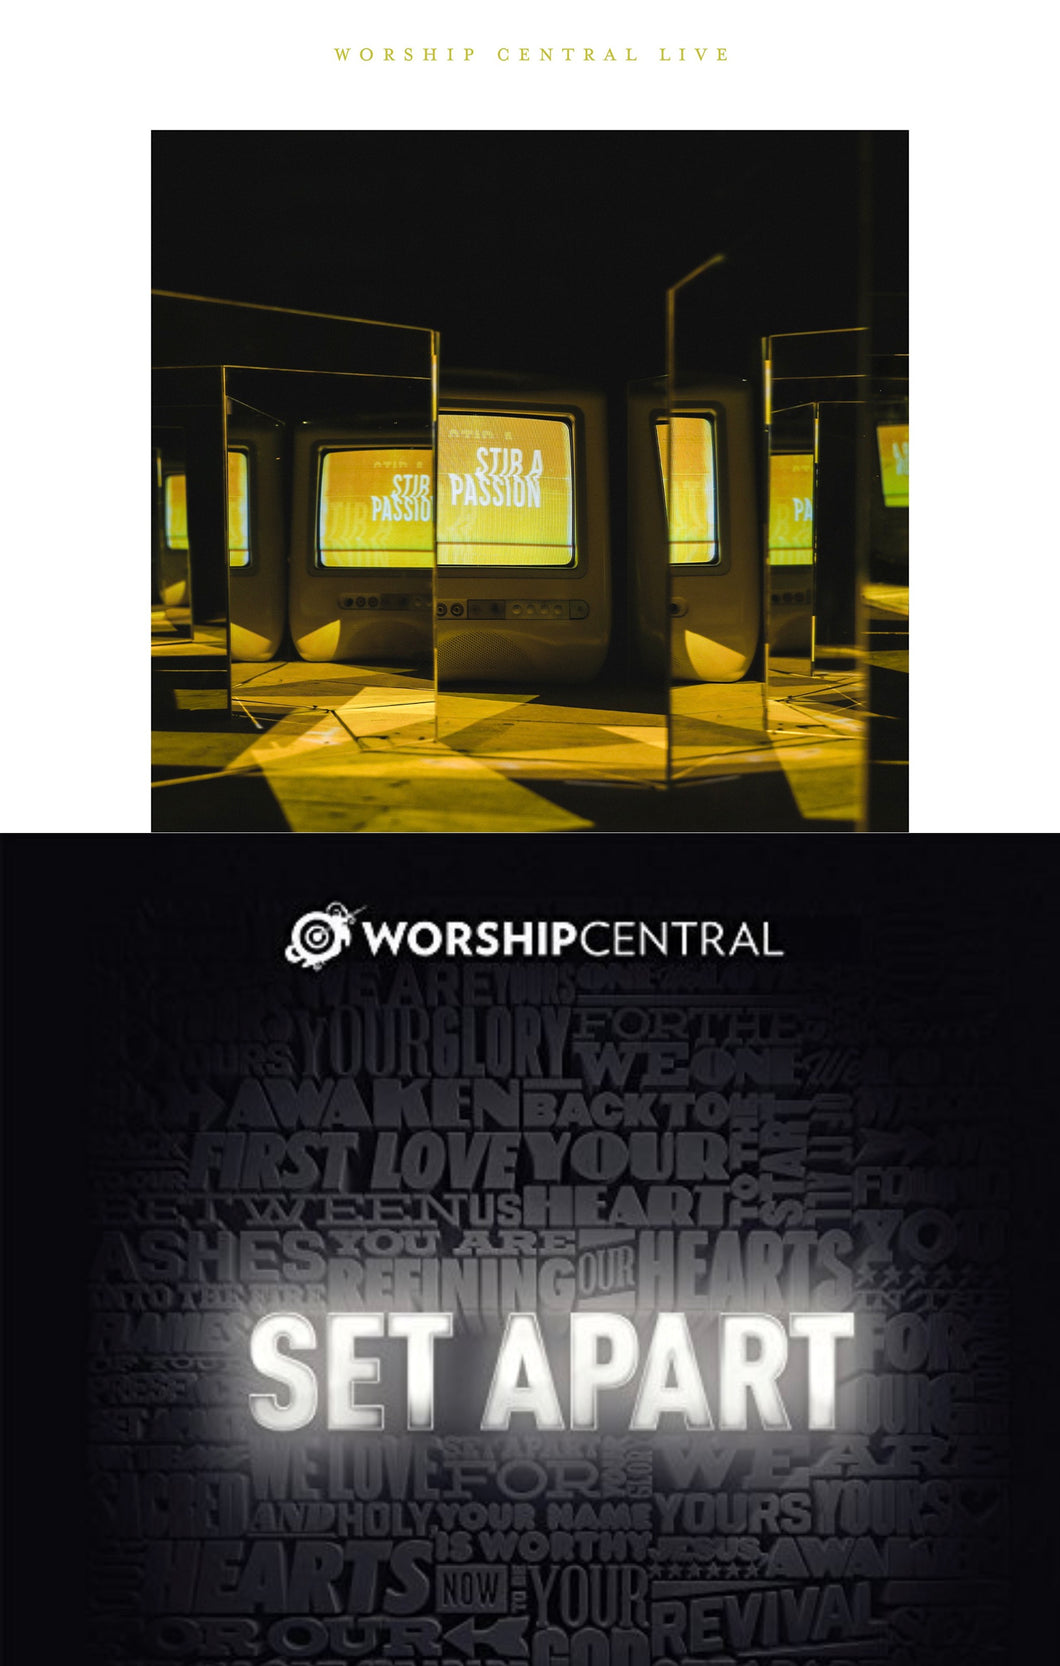 Worship Central Stir a Passion + Set Apart 2CD